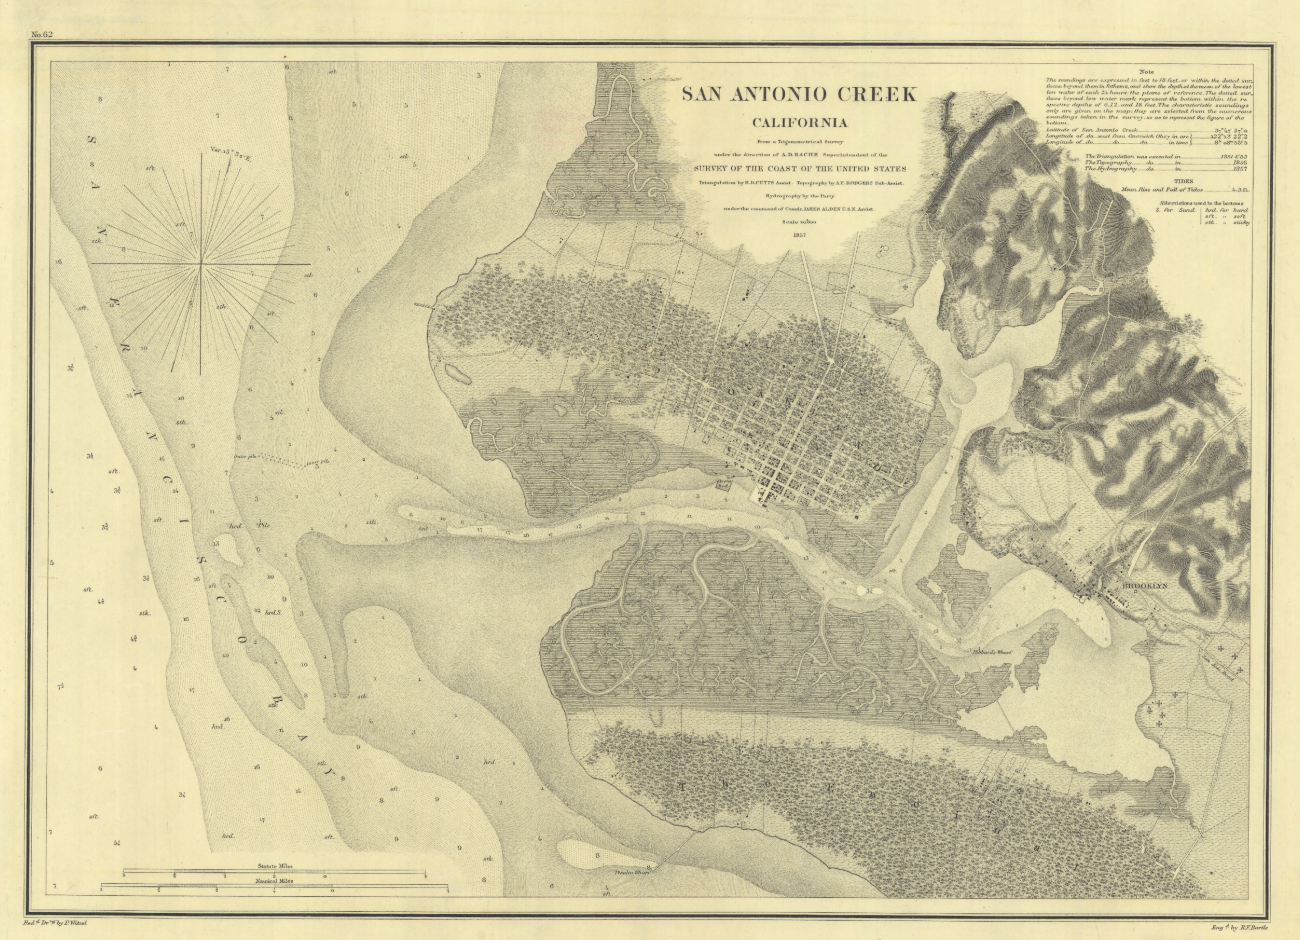 Survey Map of San Antonio Creek